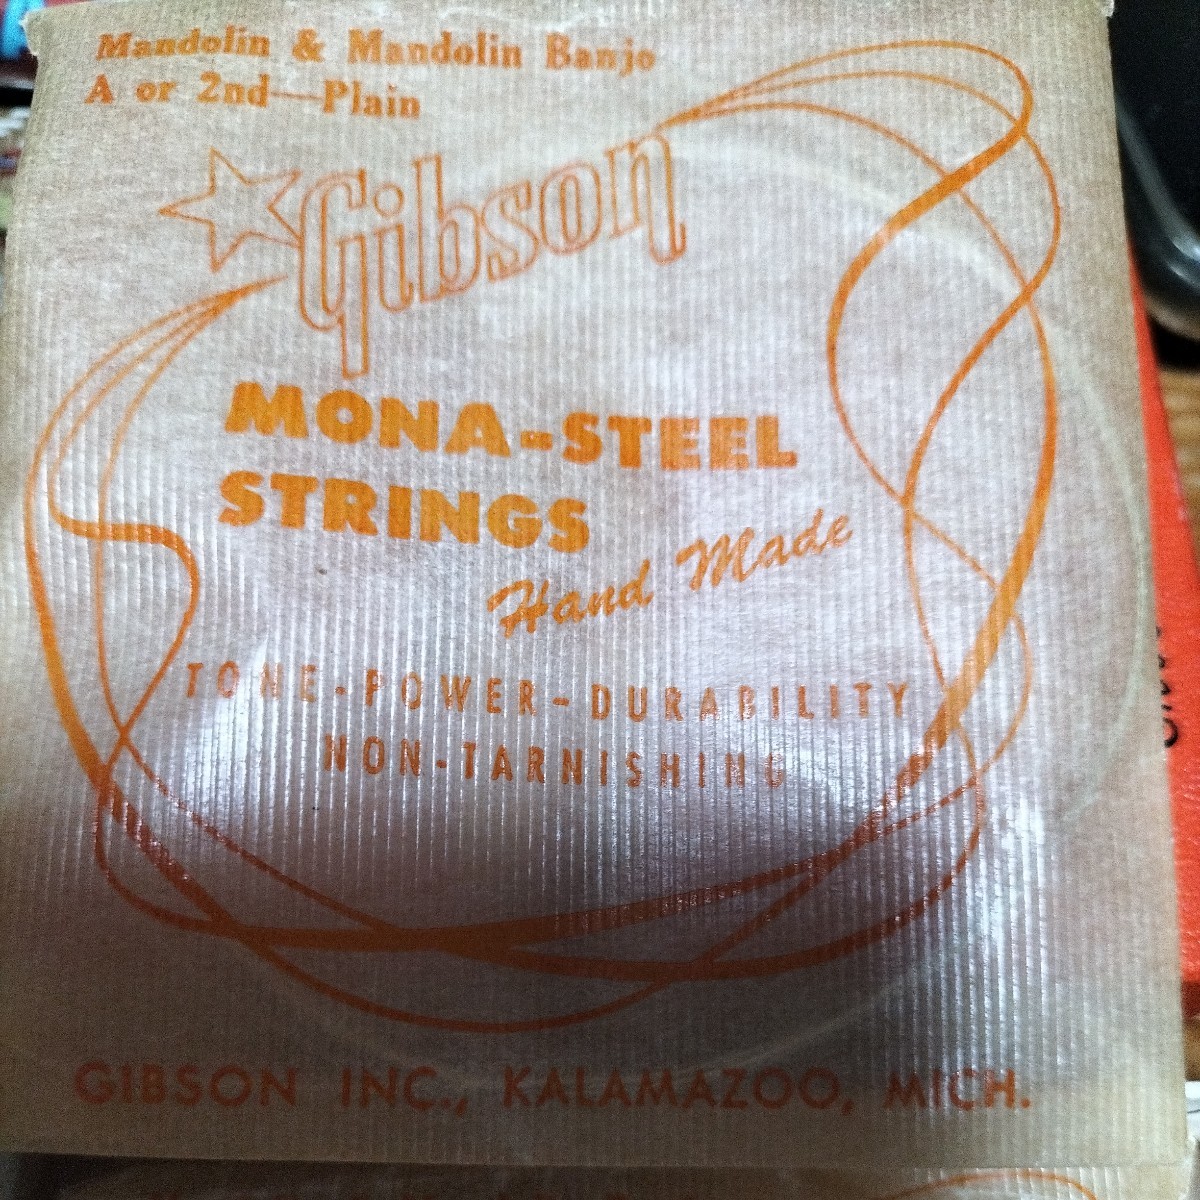 1950 годы Gibson Mona-steel strings мандолина, банджо струна ka лама Zoo,misi gun завод времена 